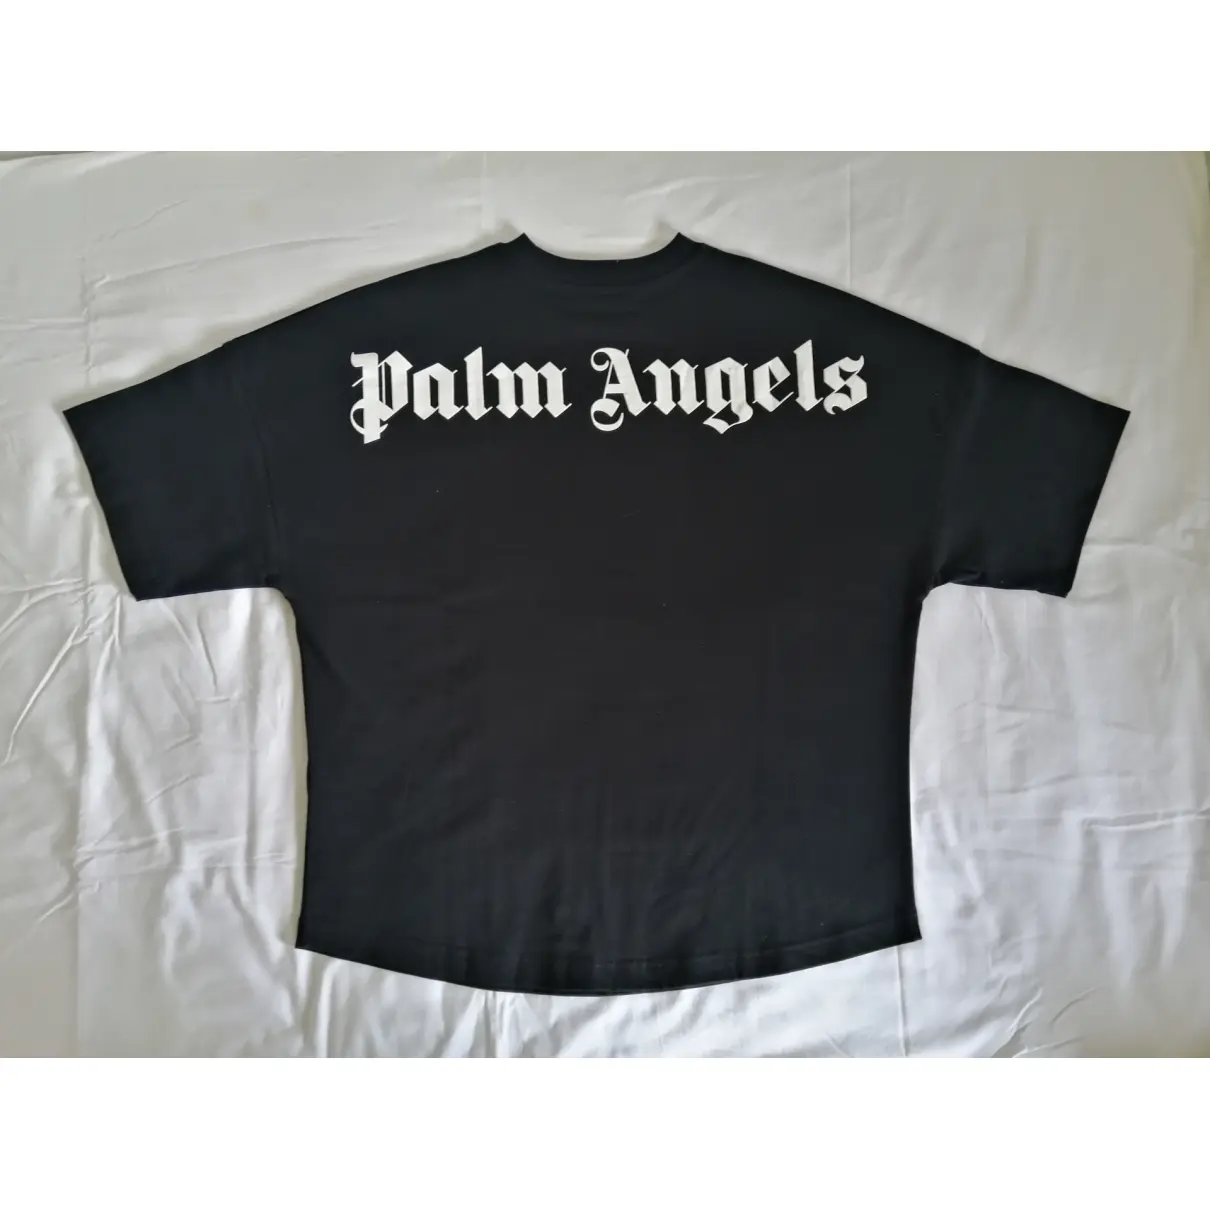 Buy Palm Angels Black Cotton T-shirt online